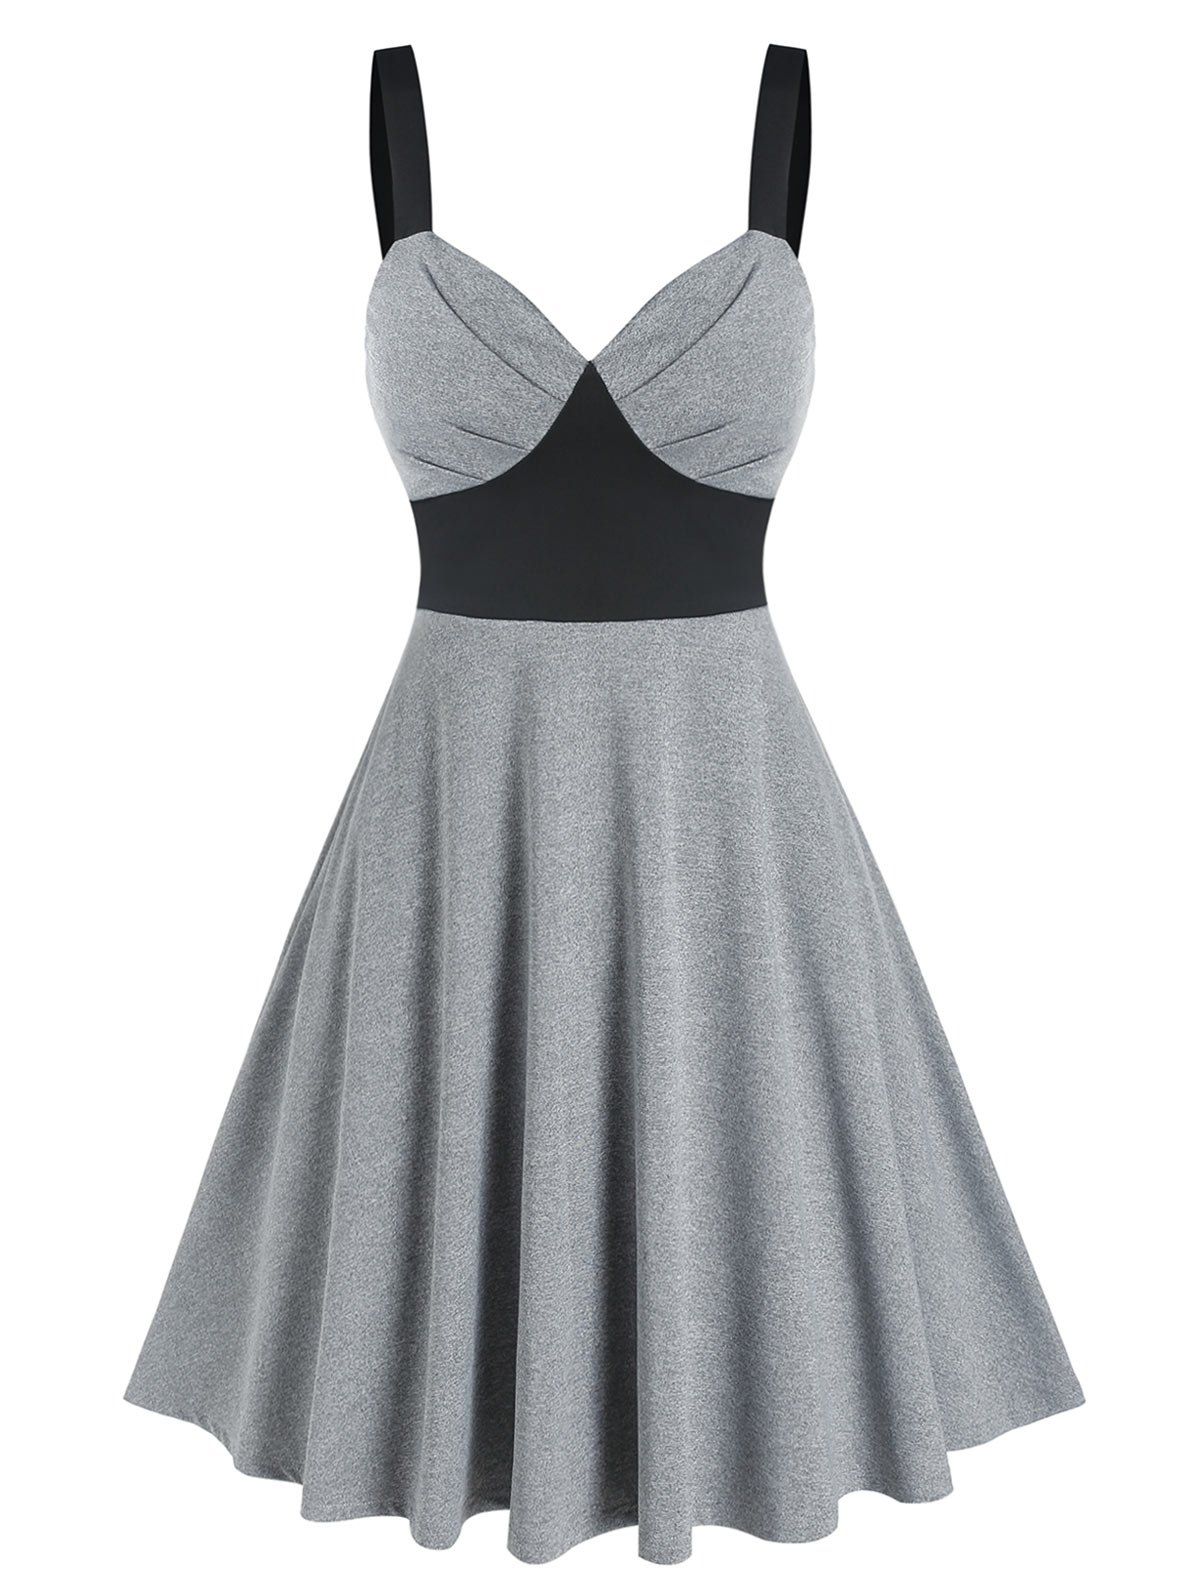 Two Tone Mini Dress Sweetheart Neck Flare Dress Ruched Bust Sleeveless A Line Dress - GRAY XXXL